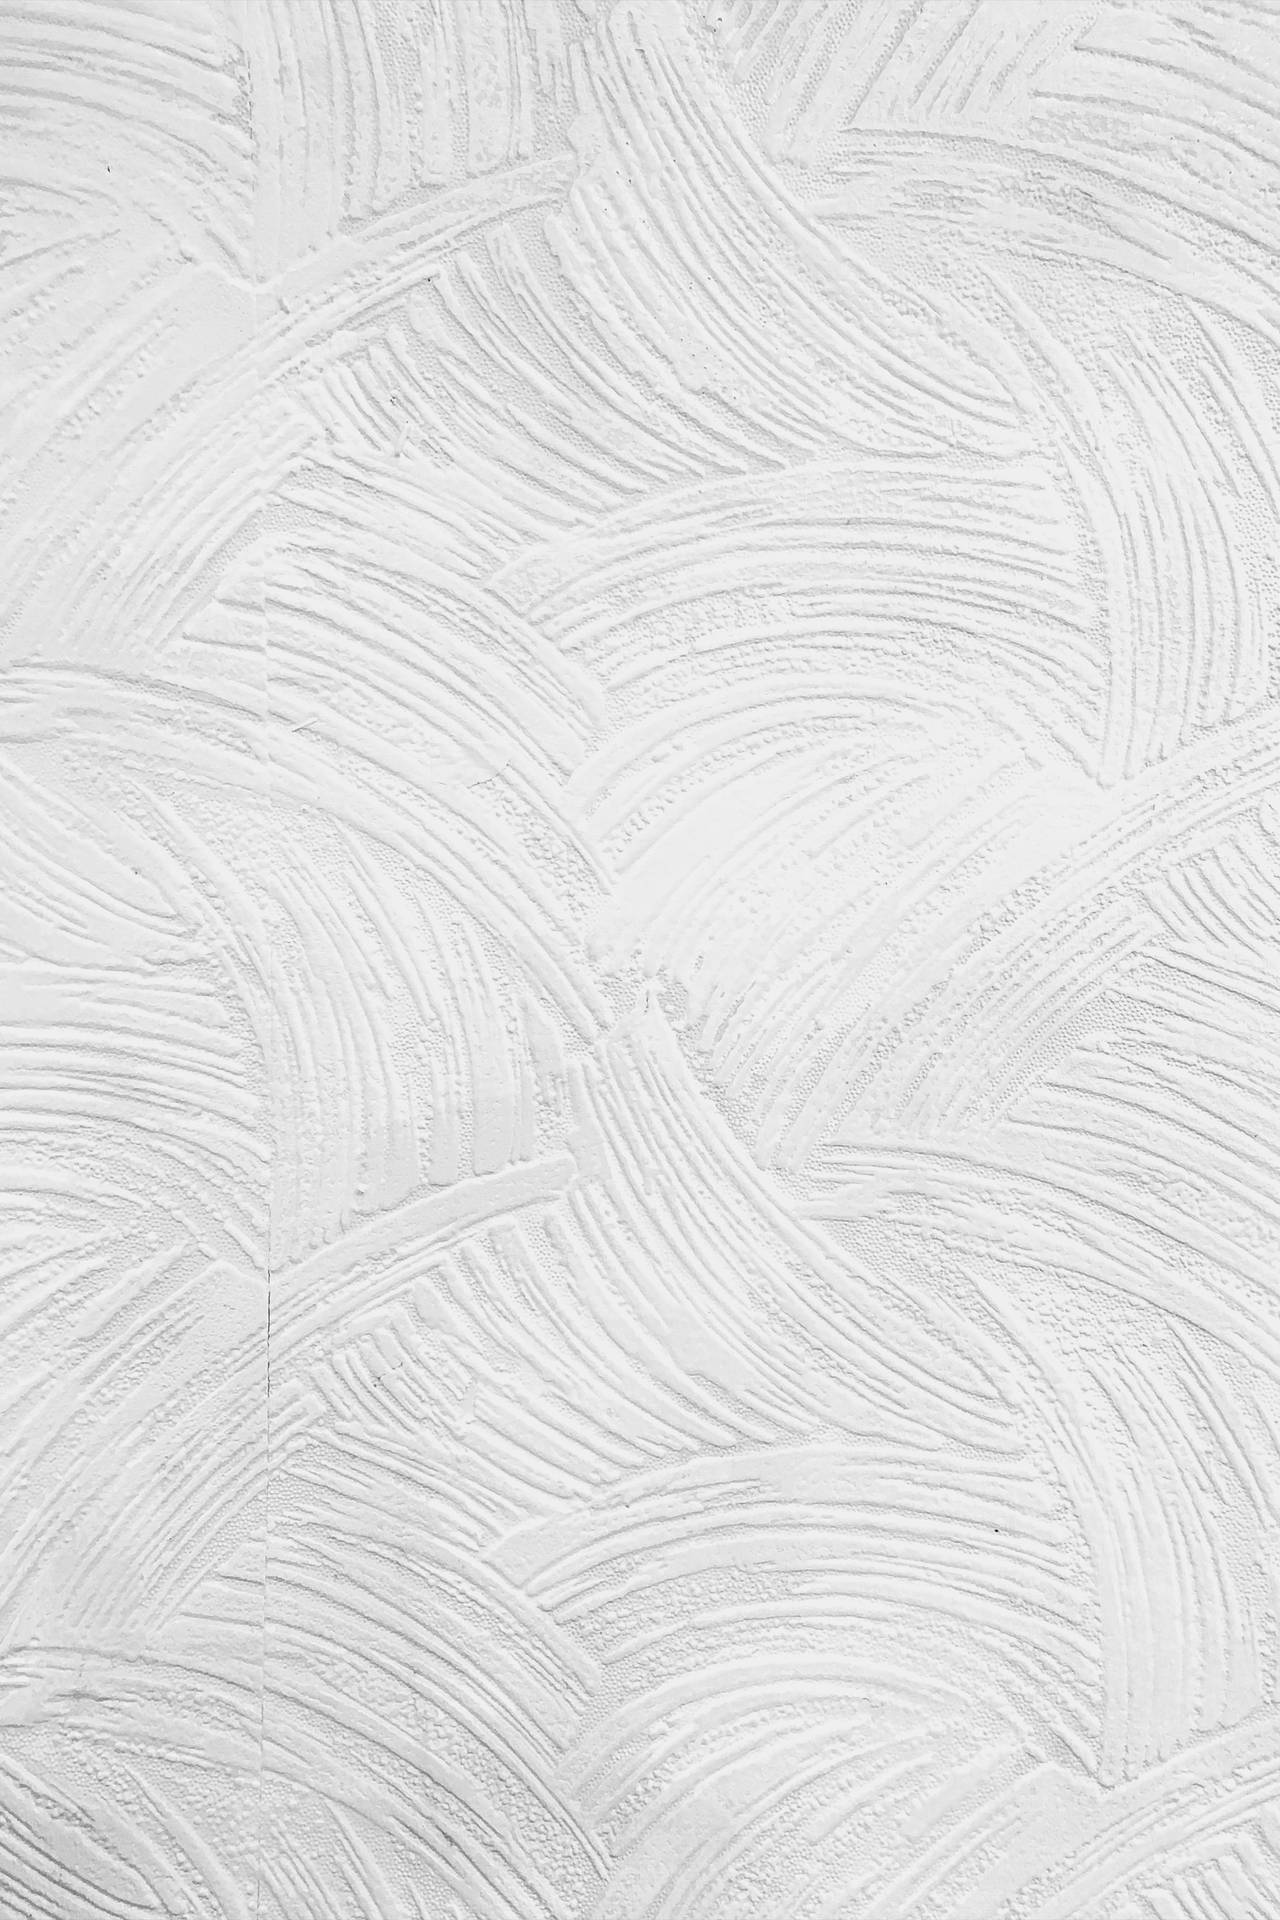 Texture Paint Brush White Pattern Wallpaper